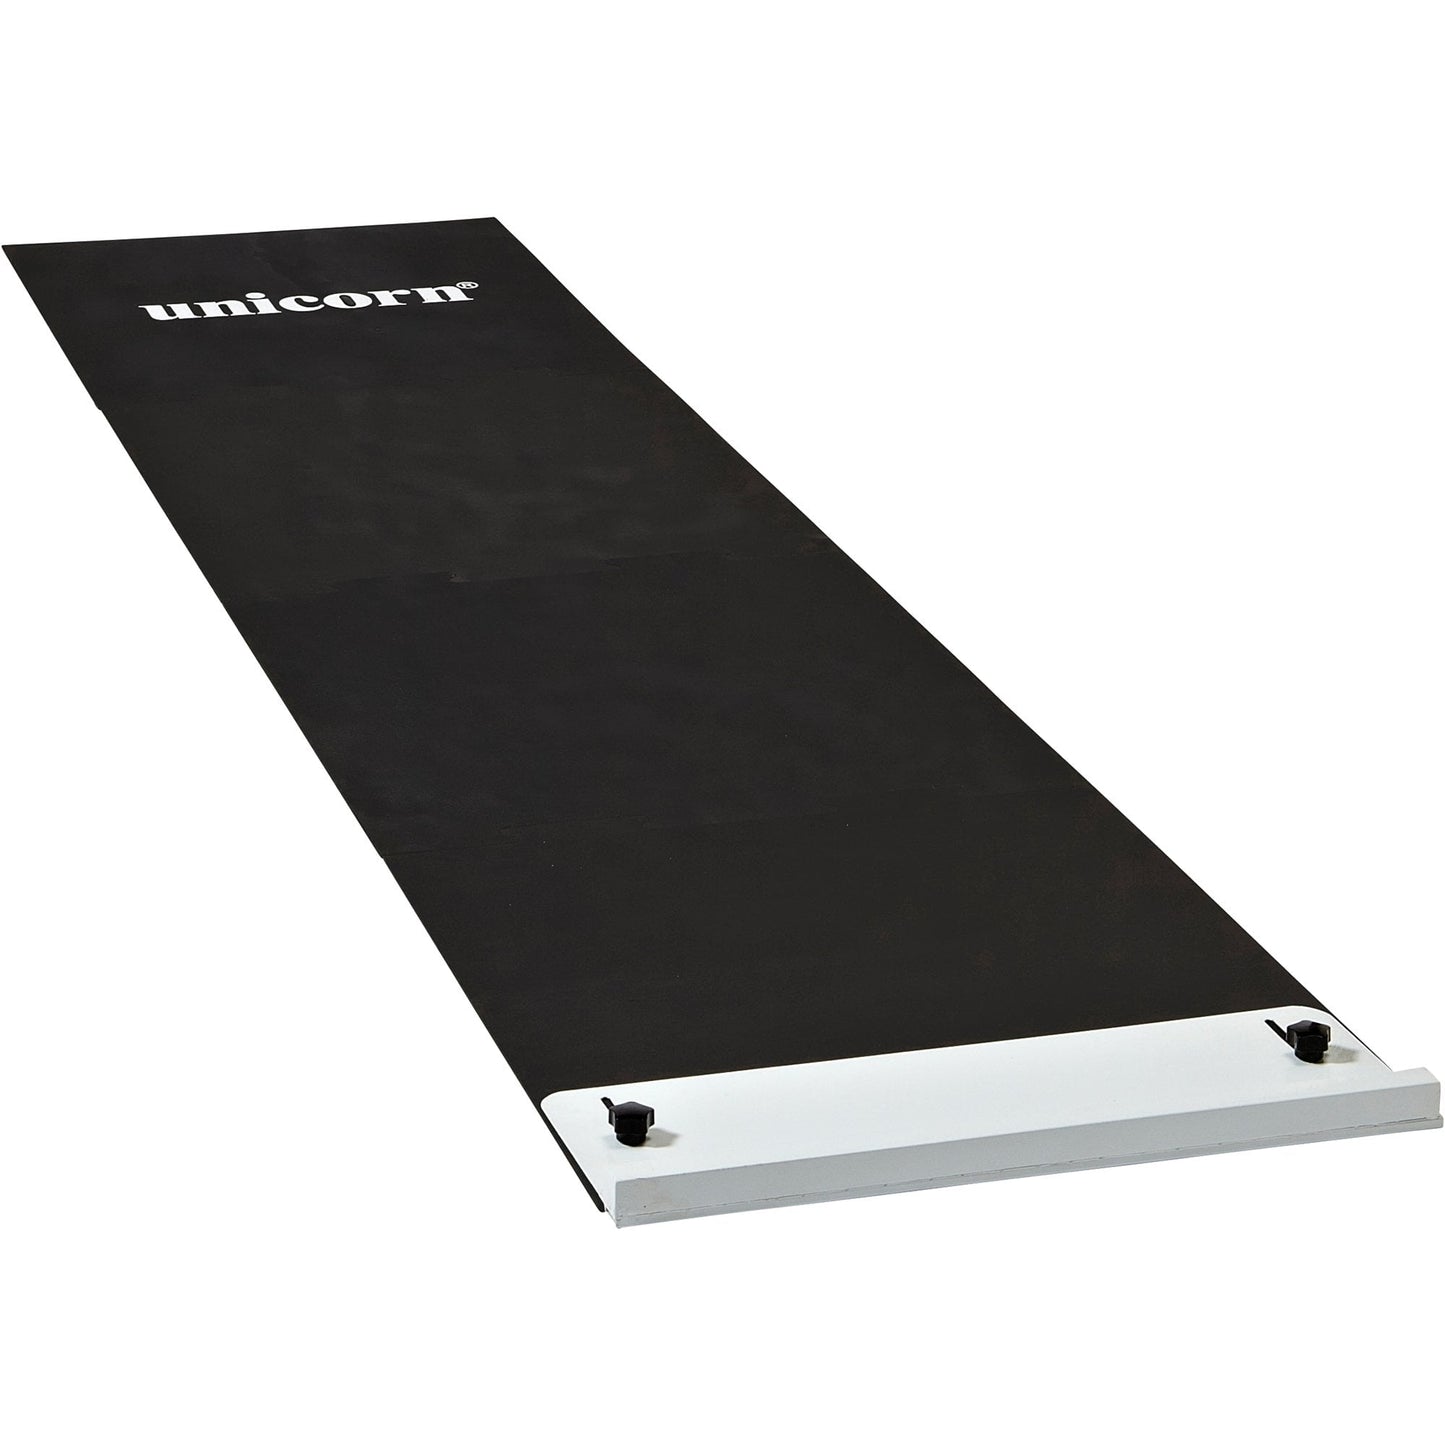 Unicorn Dart Mat - - Portable Lightweight Raised - Oche And Black